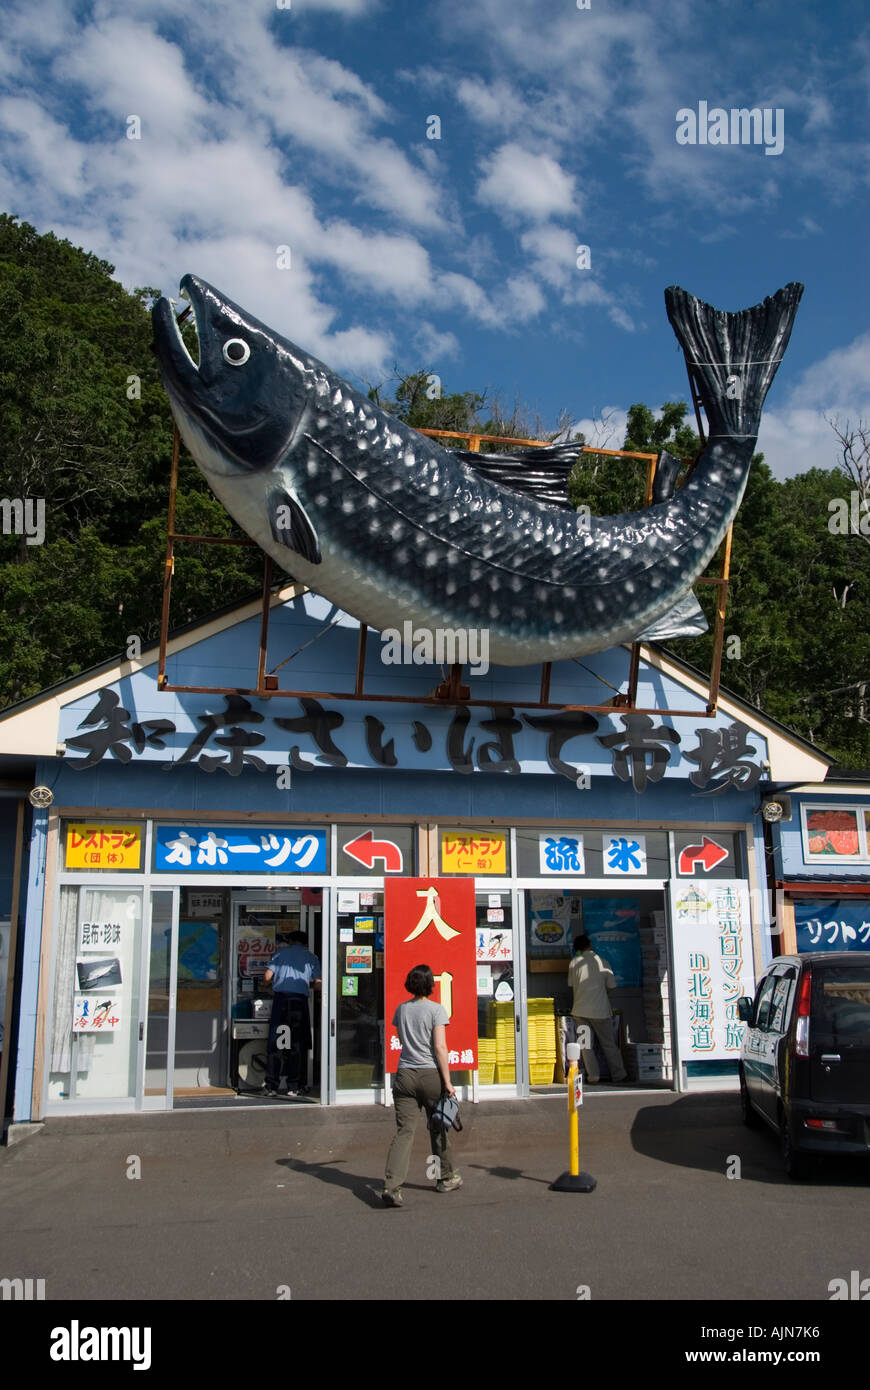 https://c8.alamy.com/comp/AJN7K6/large-plastic-fish-on-roof-of-grocery-store-in-hokkaido-japan-AJN7K6.jpg